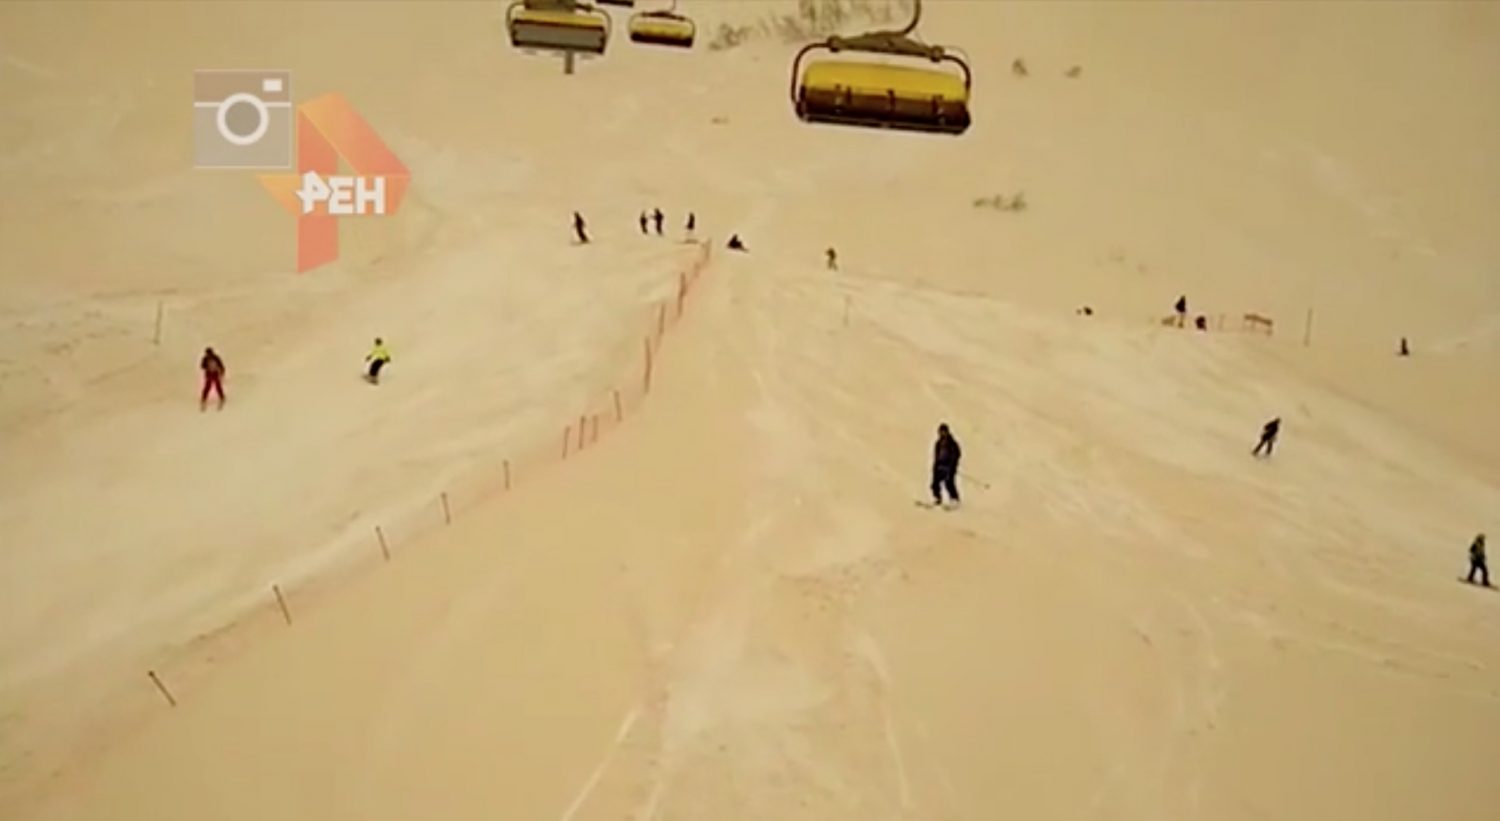 Genre Wizard scherm Bizar: Russische pistes kleuren volledig oranje - Snowchamps